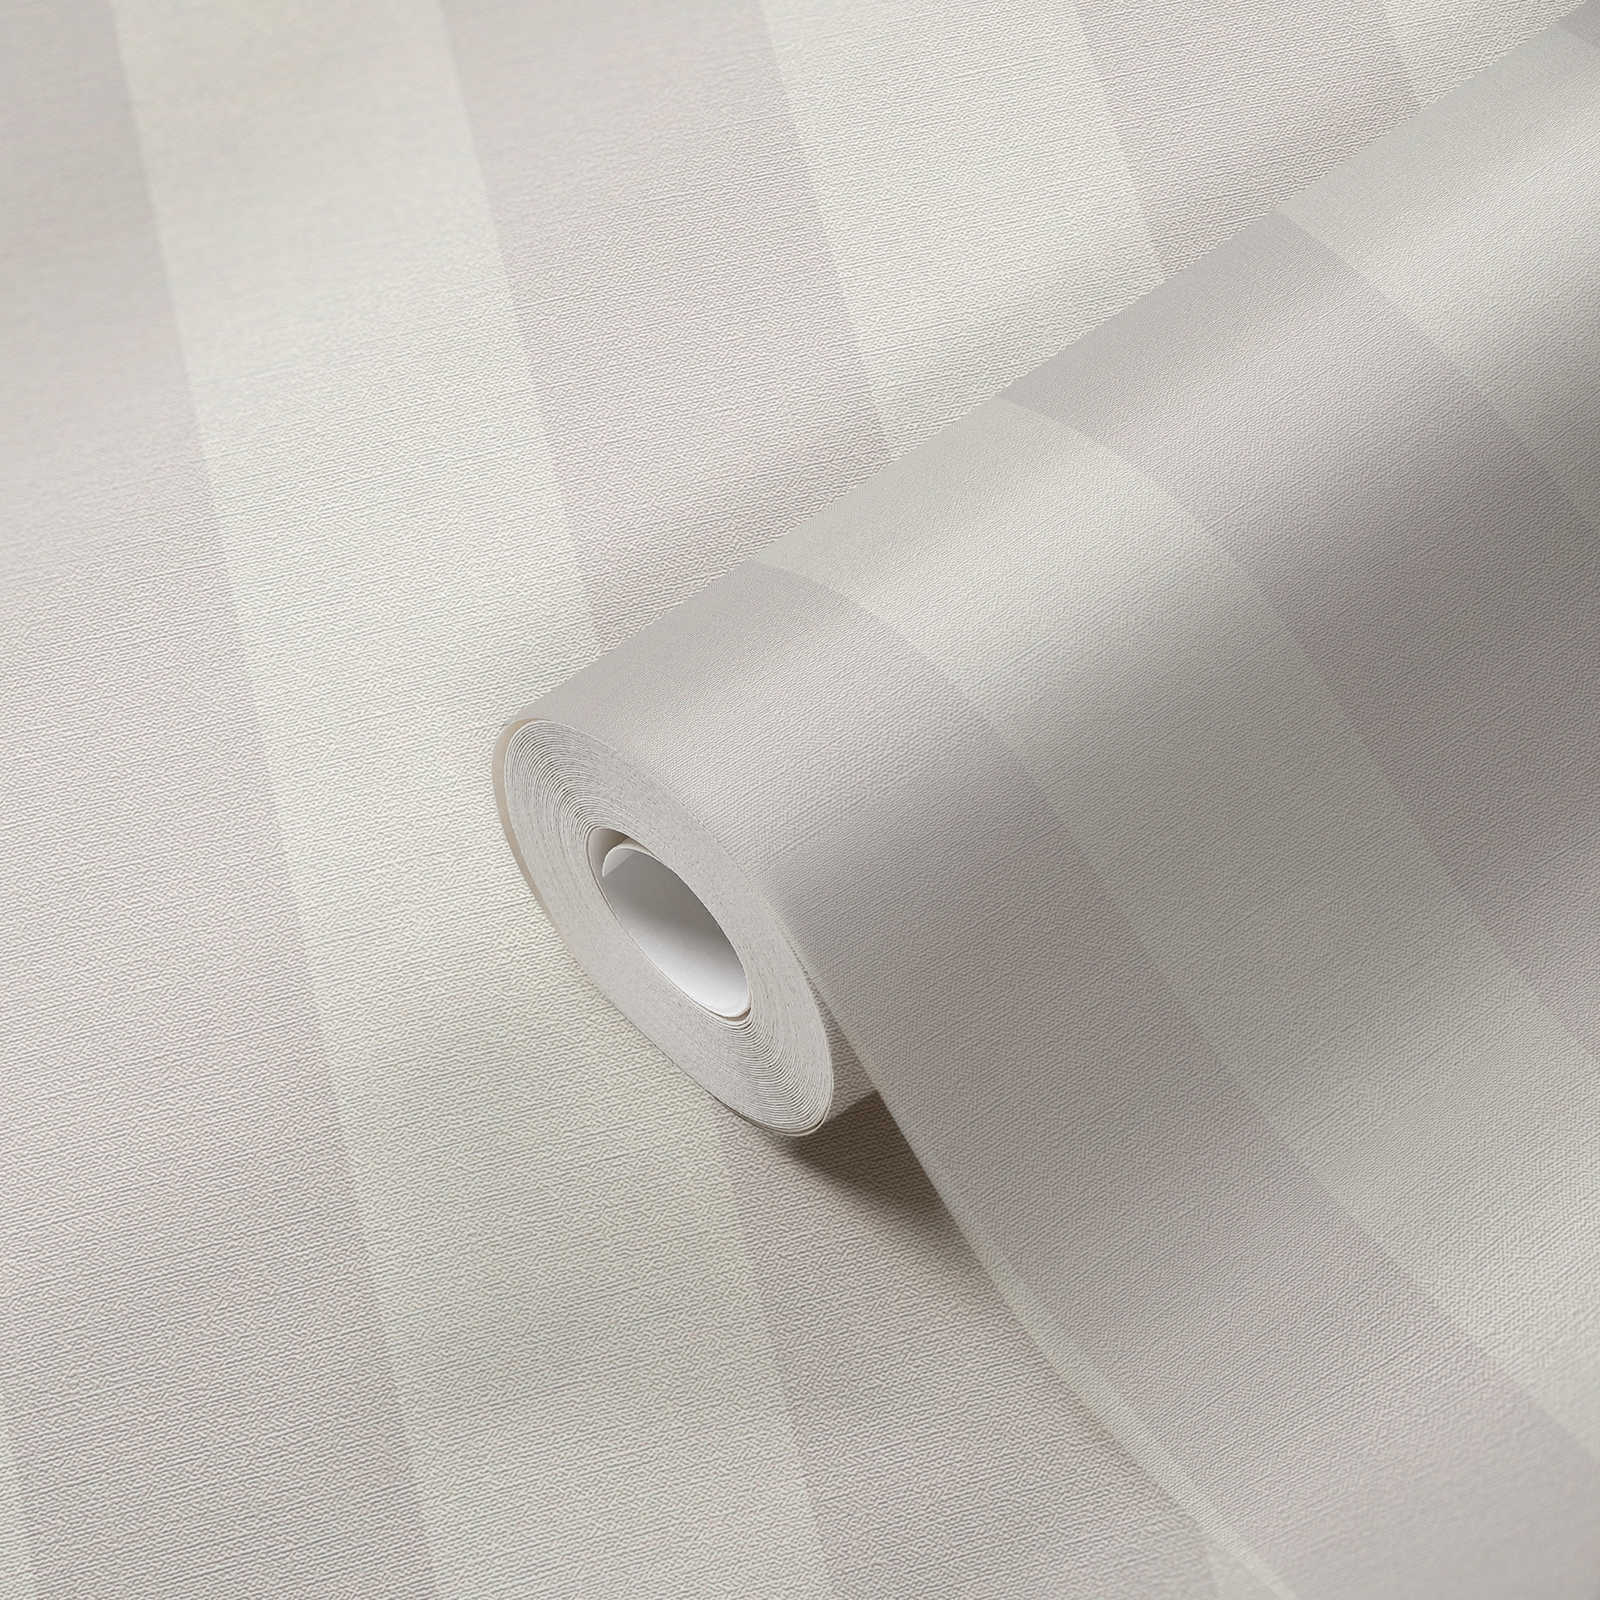             Streifen Vliestapete mit Leinenoptik PVC-frei – Grau, Weiß
        